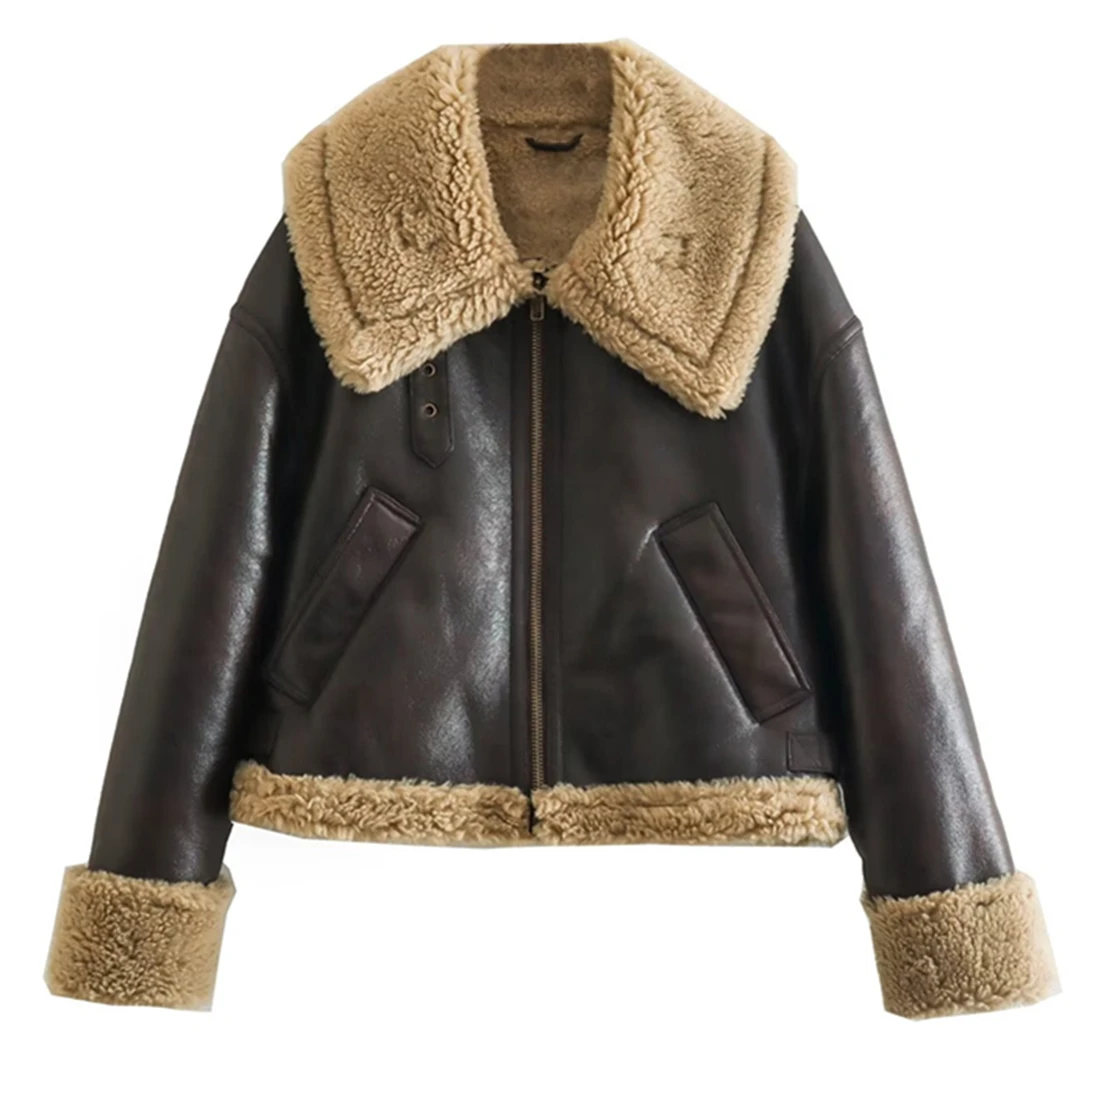 Maxdutti American Retro Coat Women Cashmere Warm Leather Jacket With Belt Loose